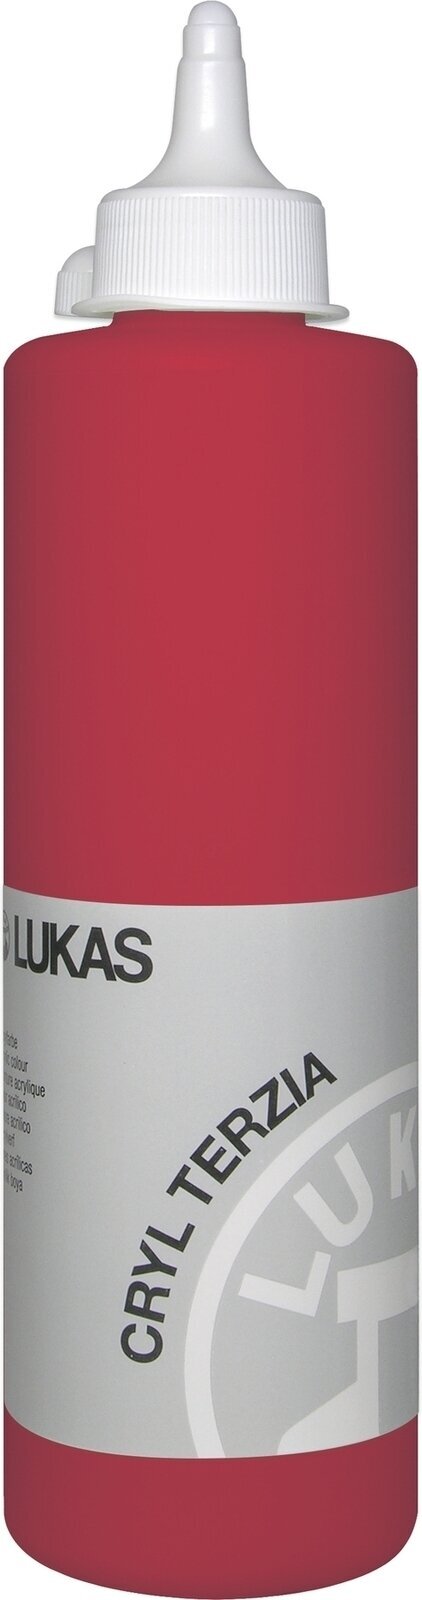 Acrylic Paint Lukas Cryl Terzia Acrylic Paint 500 ml Cadmium Red Deep Hue